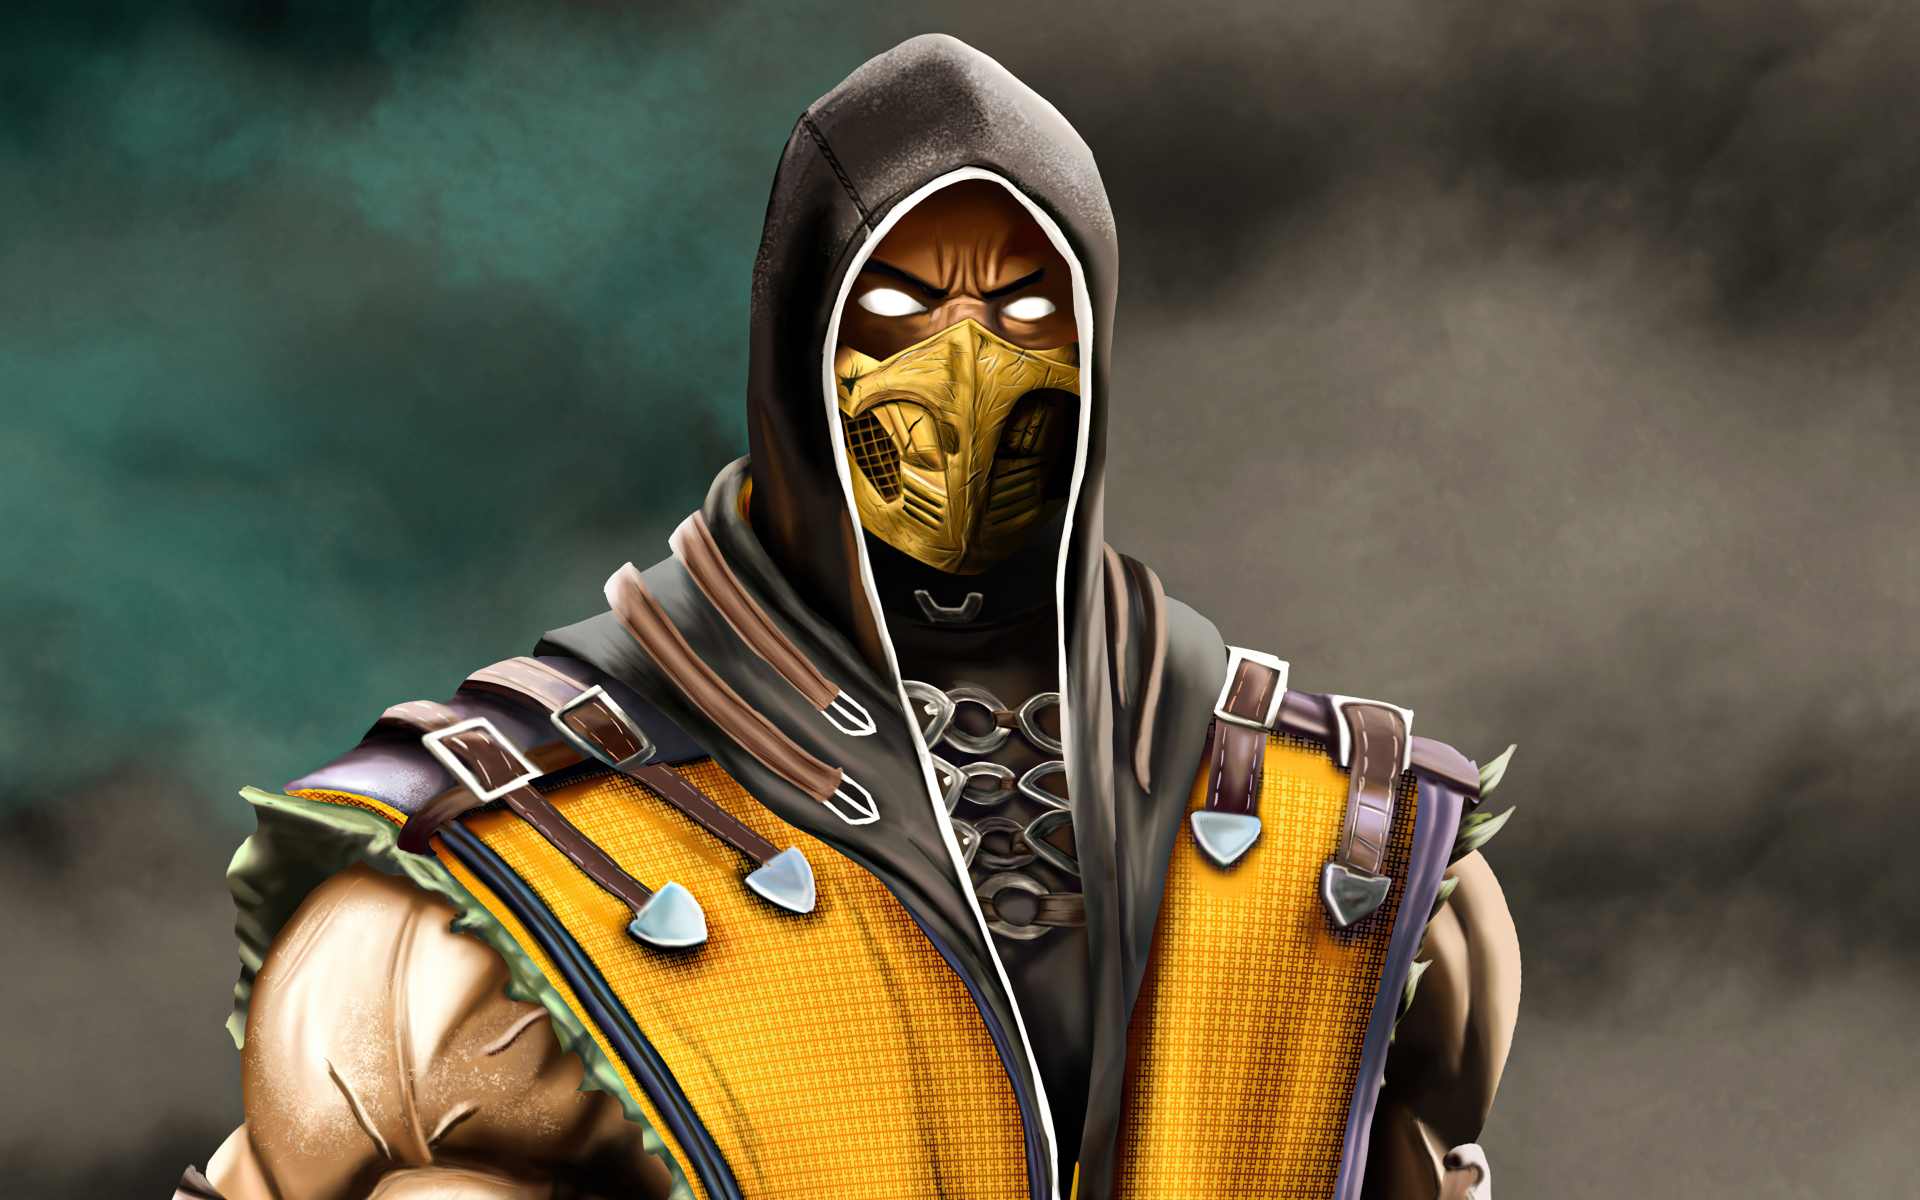 Scorpio character in the movie Mortal Kombat, 2021